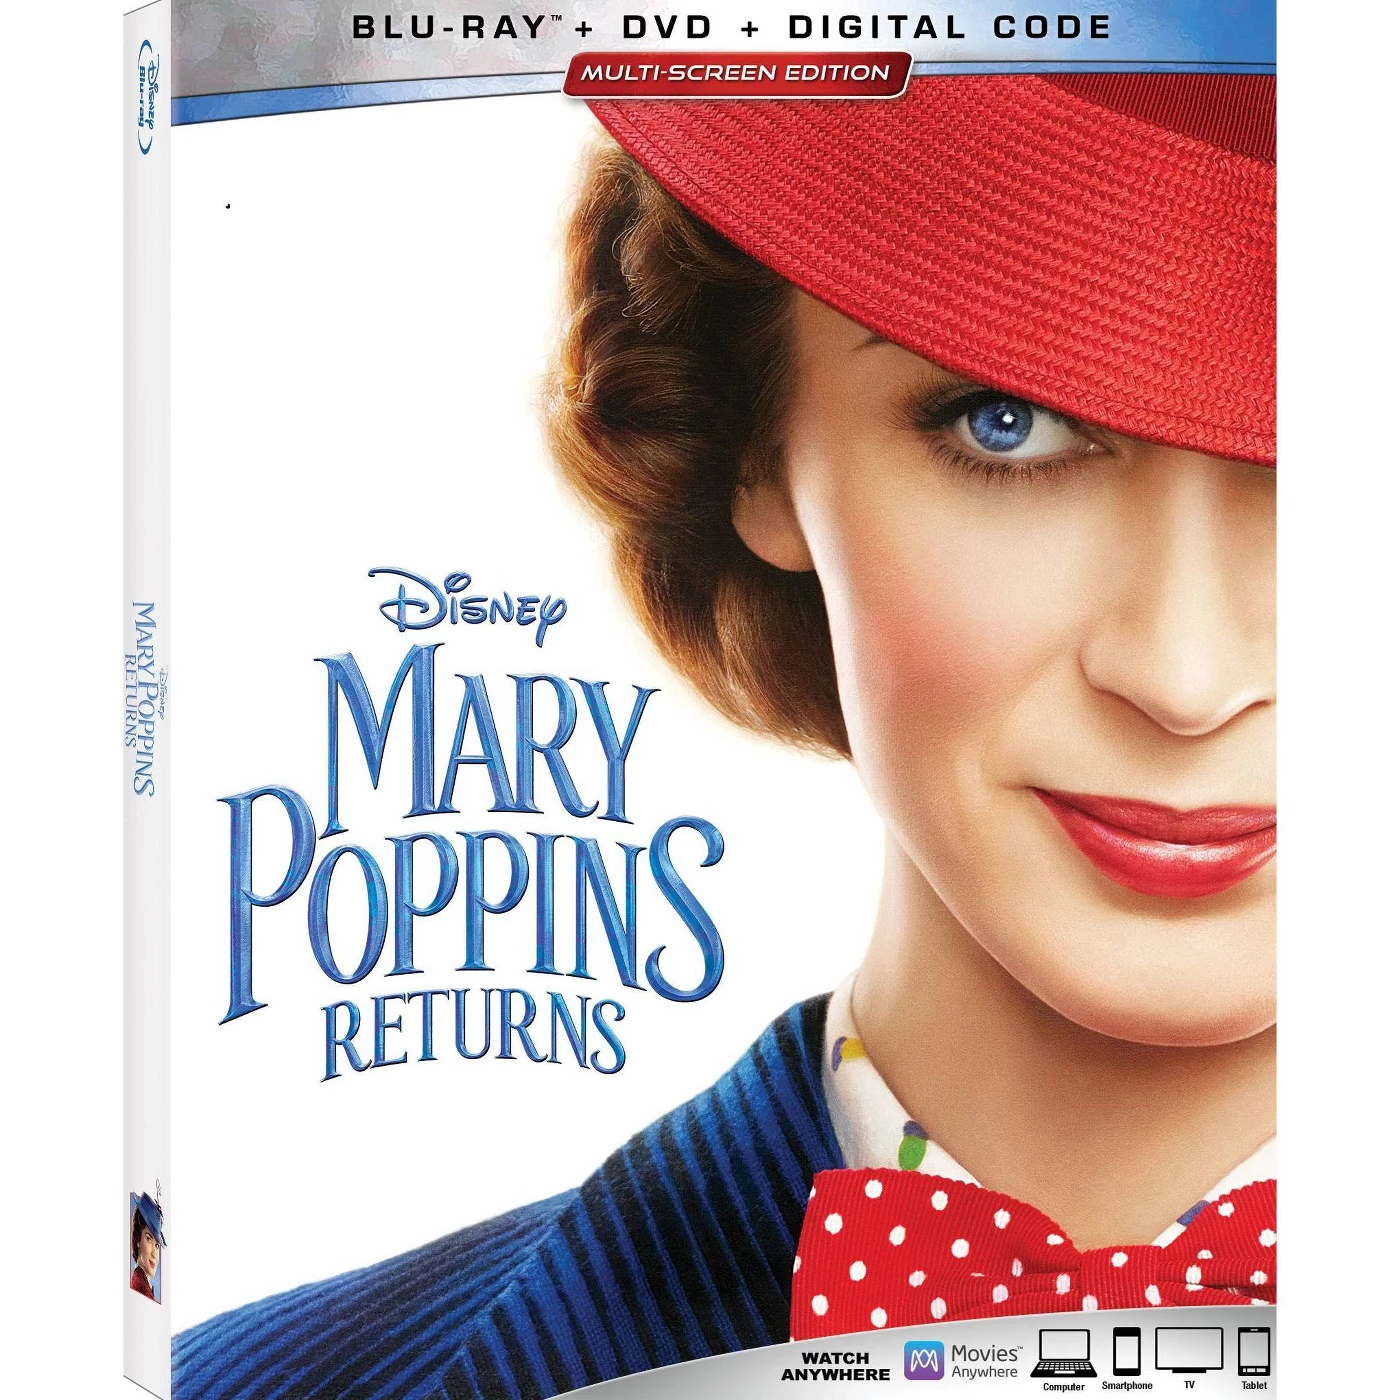 Mary Poppins Returns (Blu Ray + DVD + Digital) - image 1 of 2